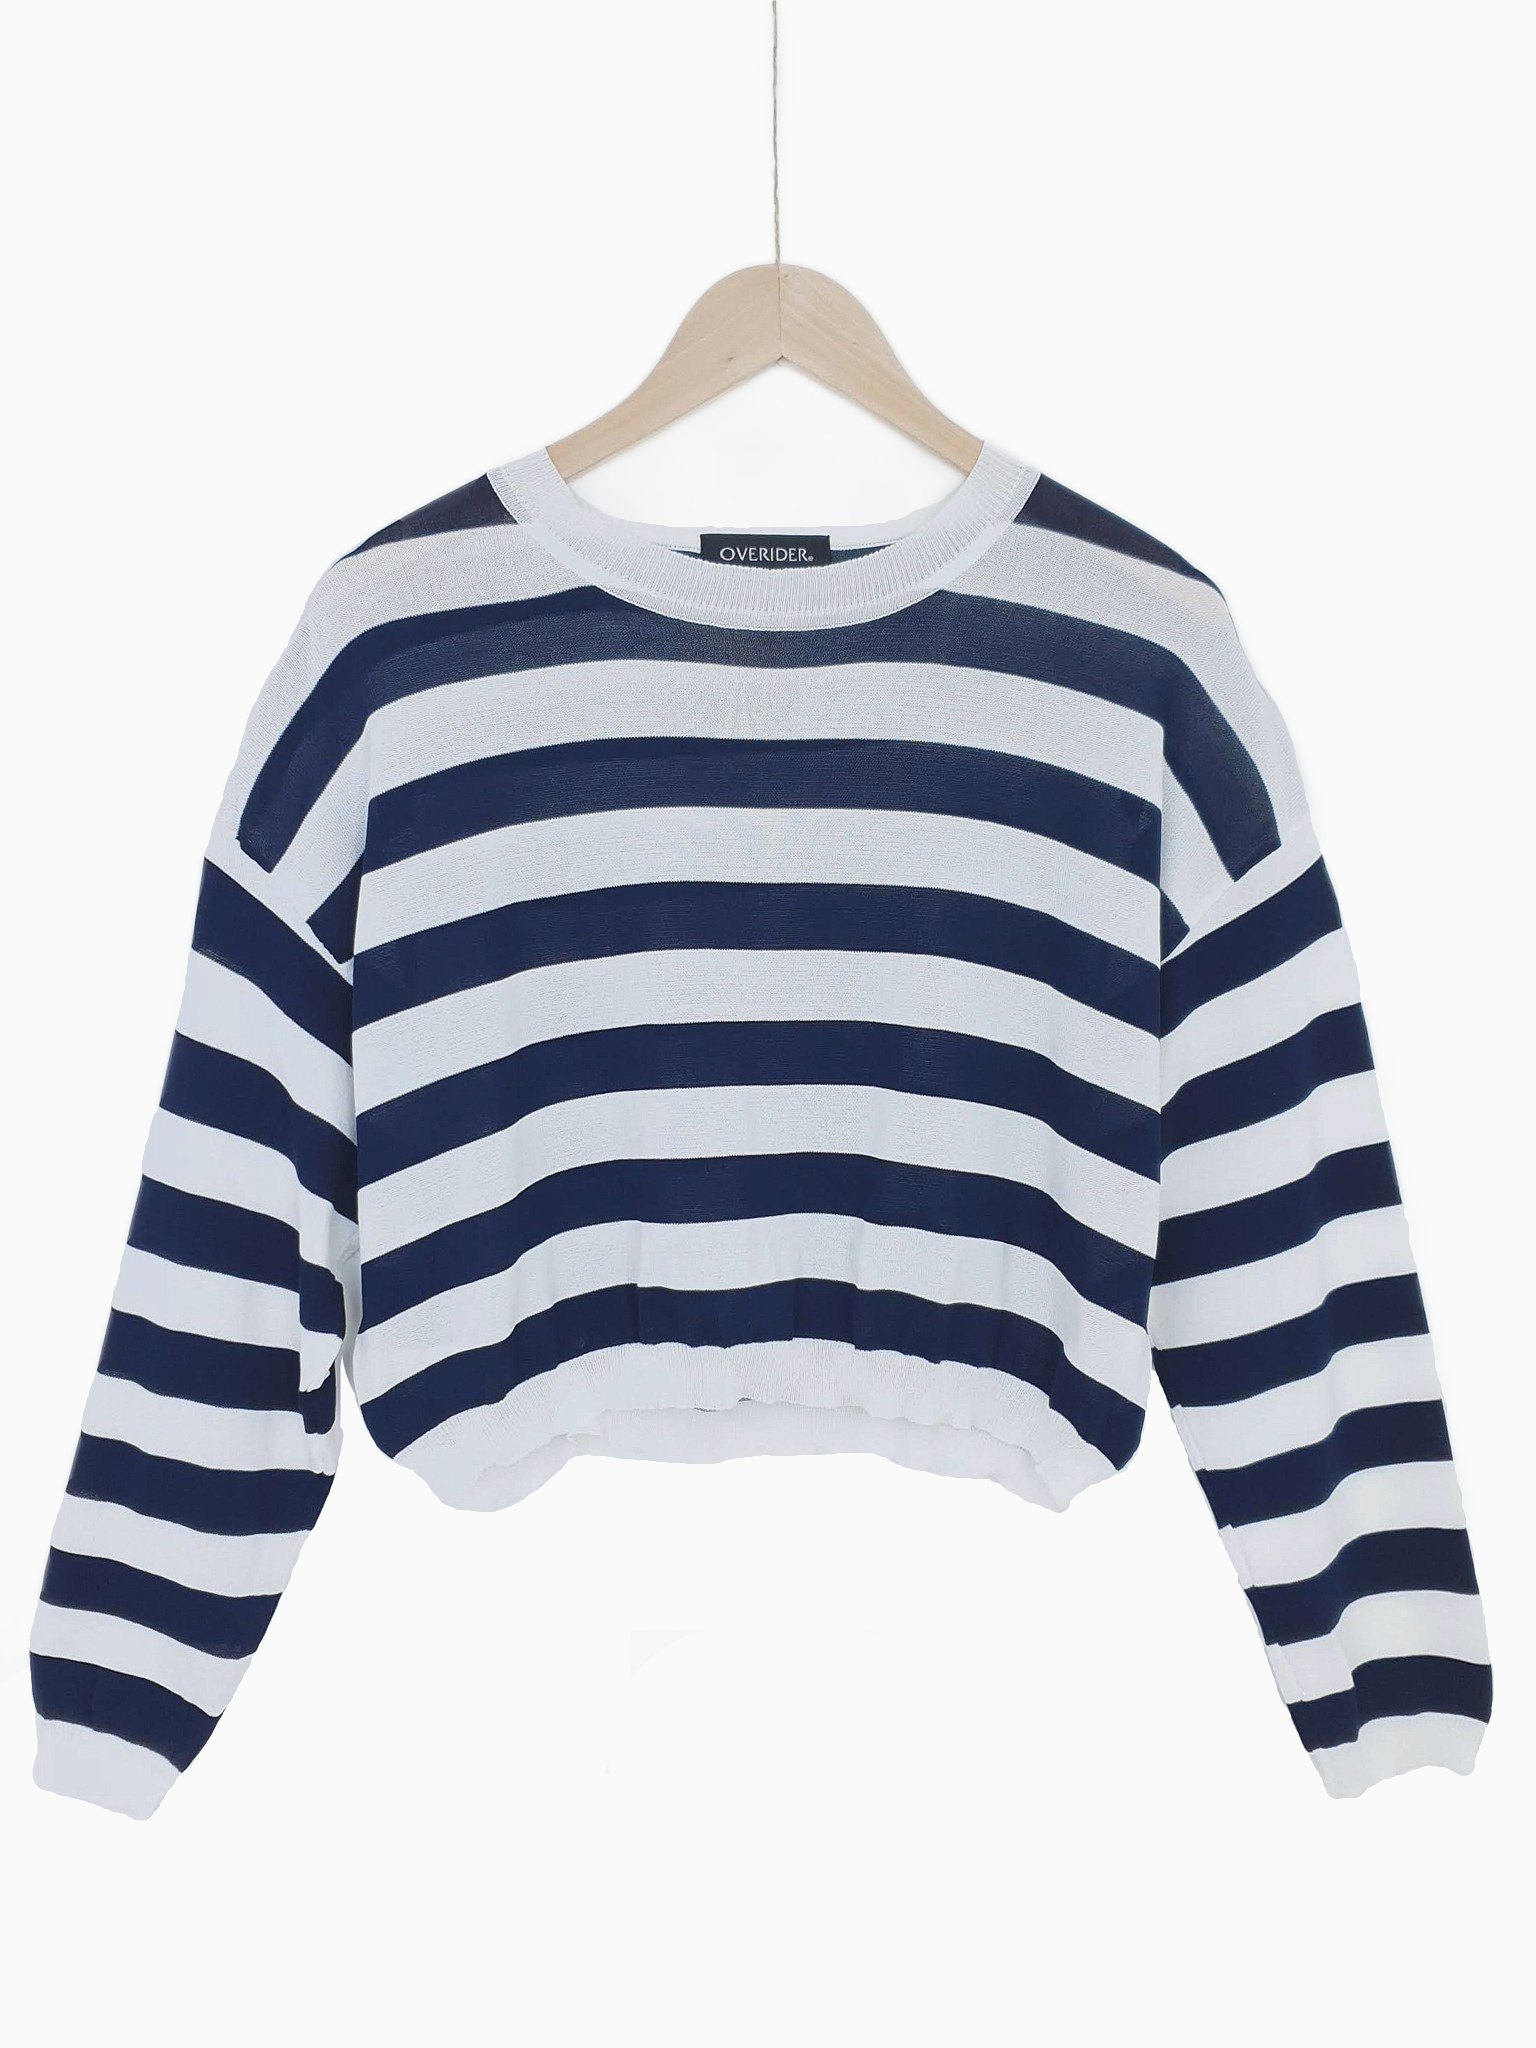 DITZA | Striped Sweater Top | Navy